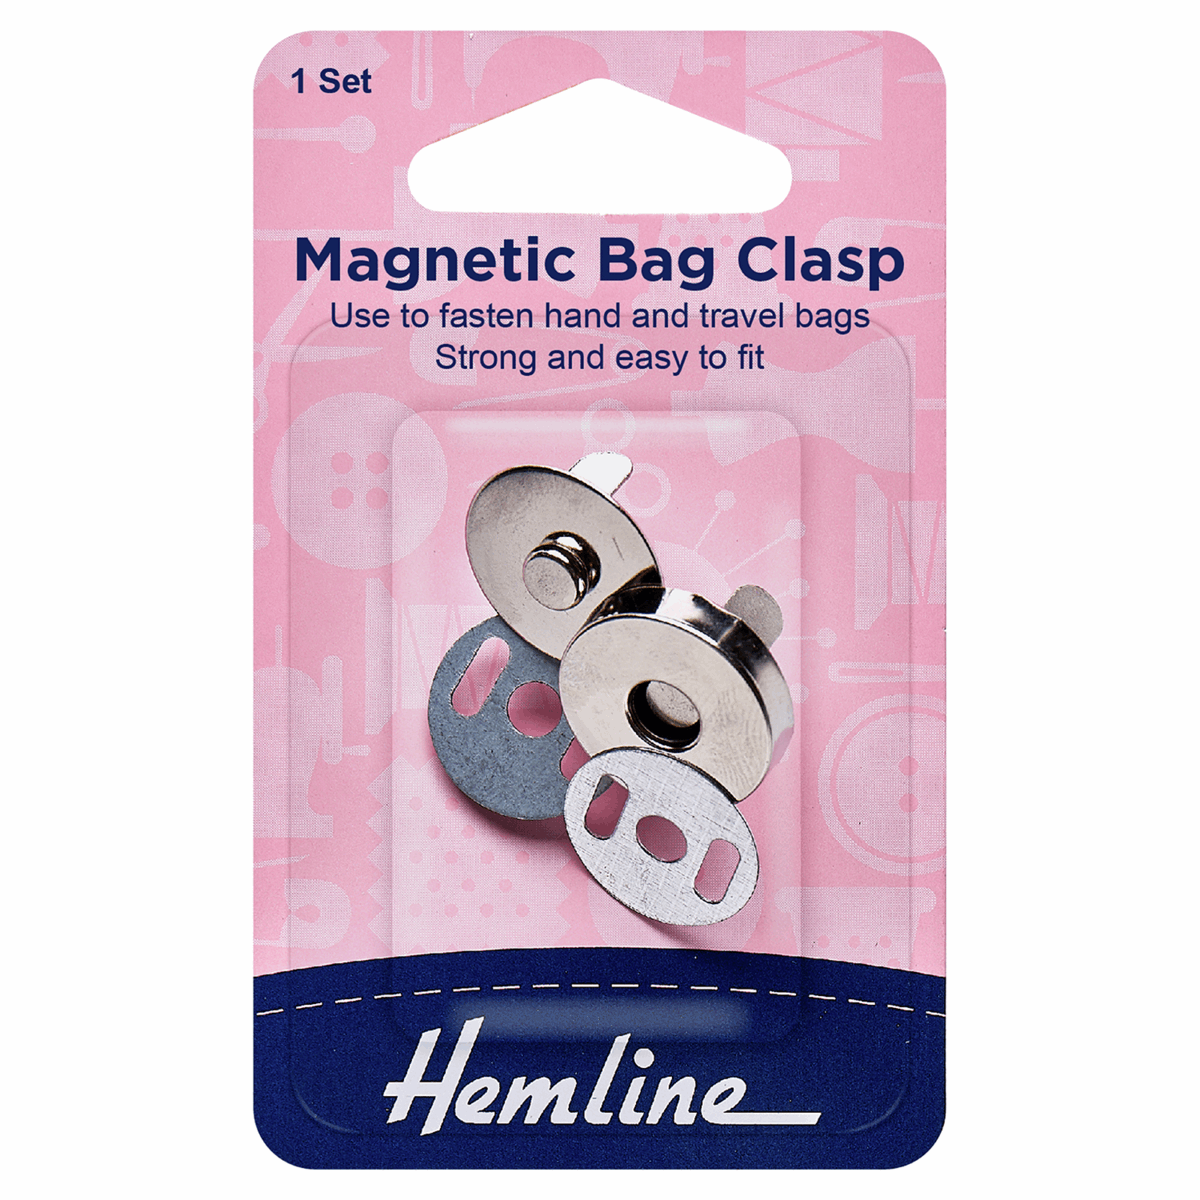 Hemline Magnetic Bag Clasp